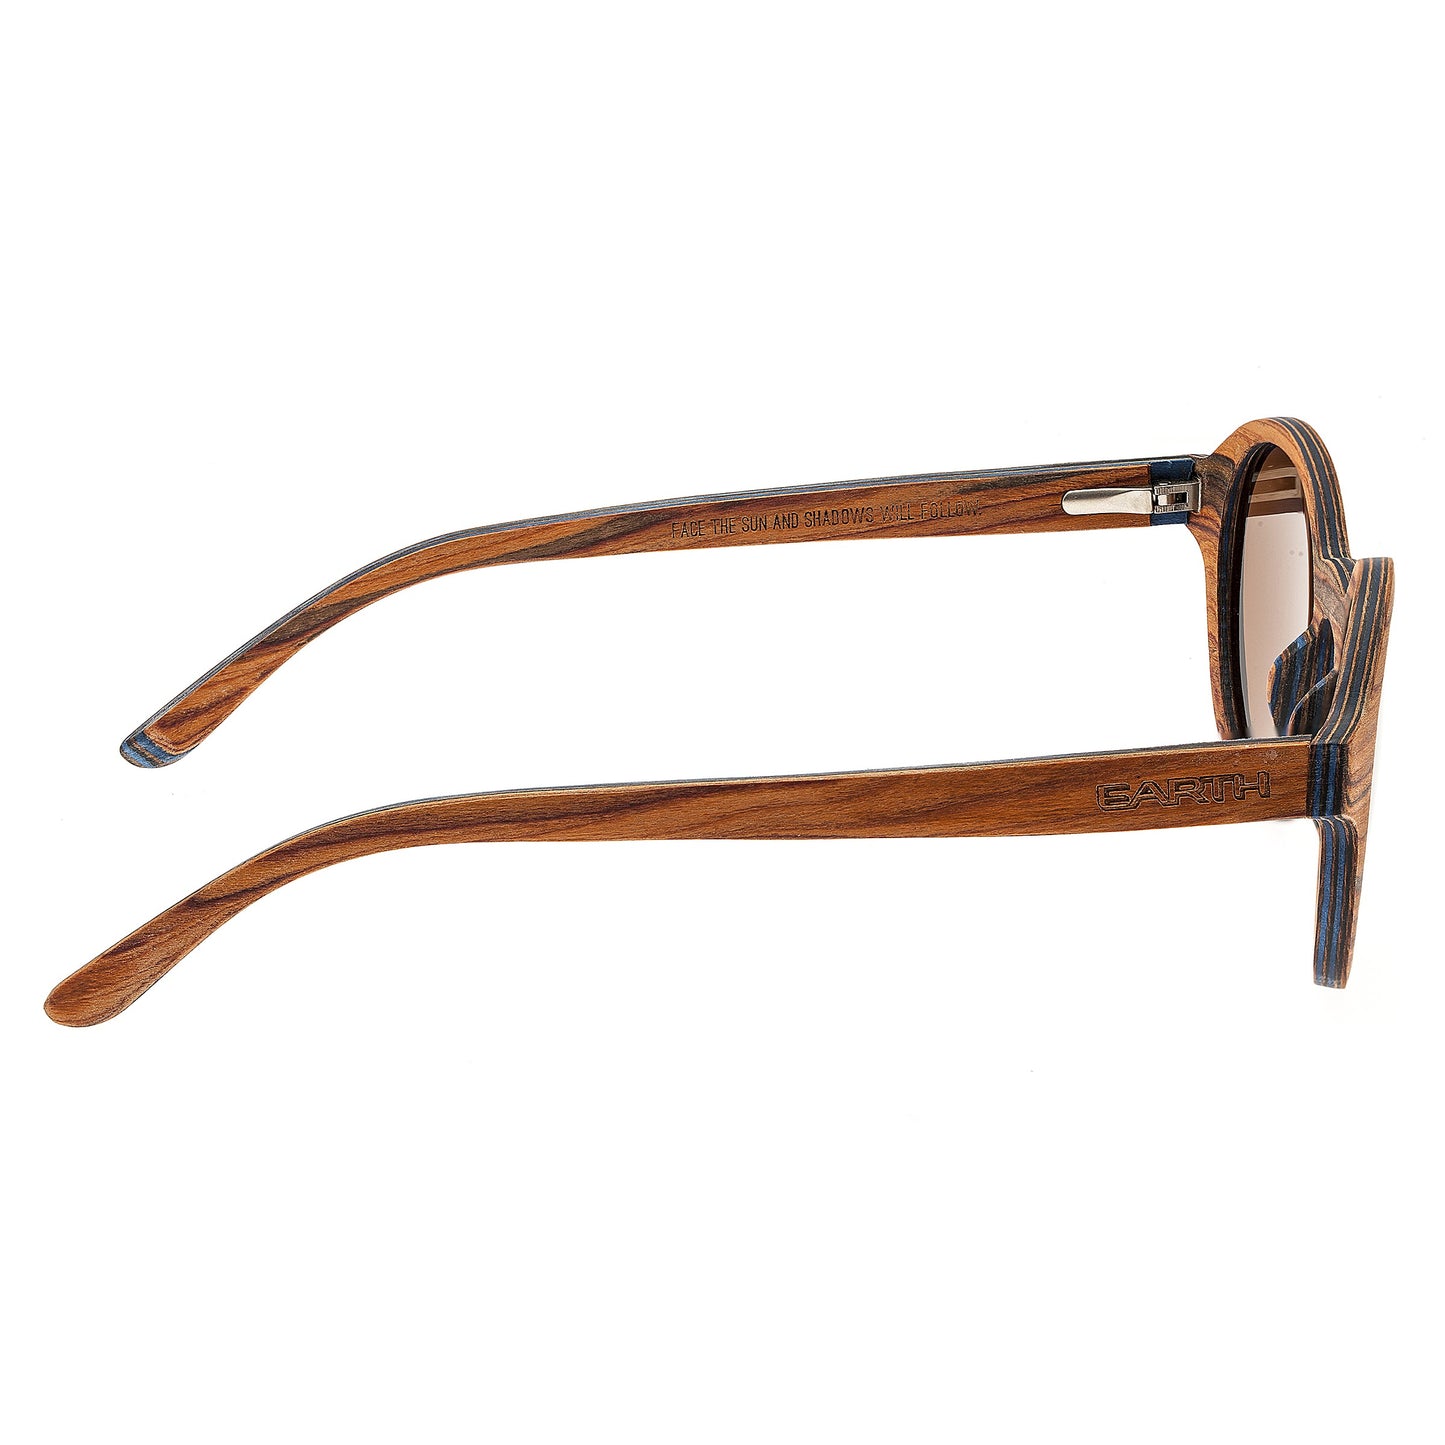 Earth Wood Maho Polarized Sunglasses - Sandlewood/Brown - ESG085S